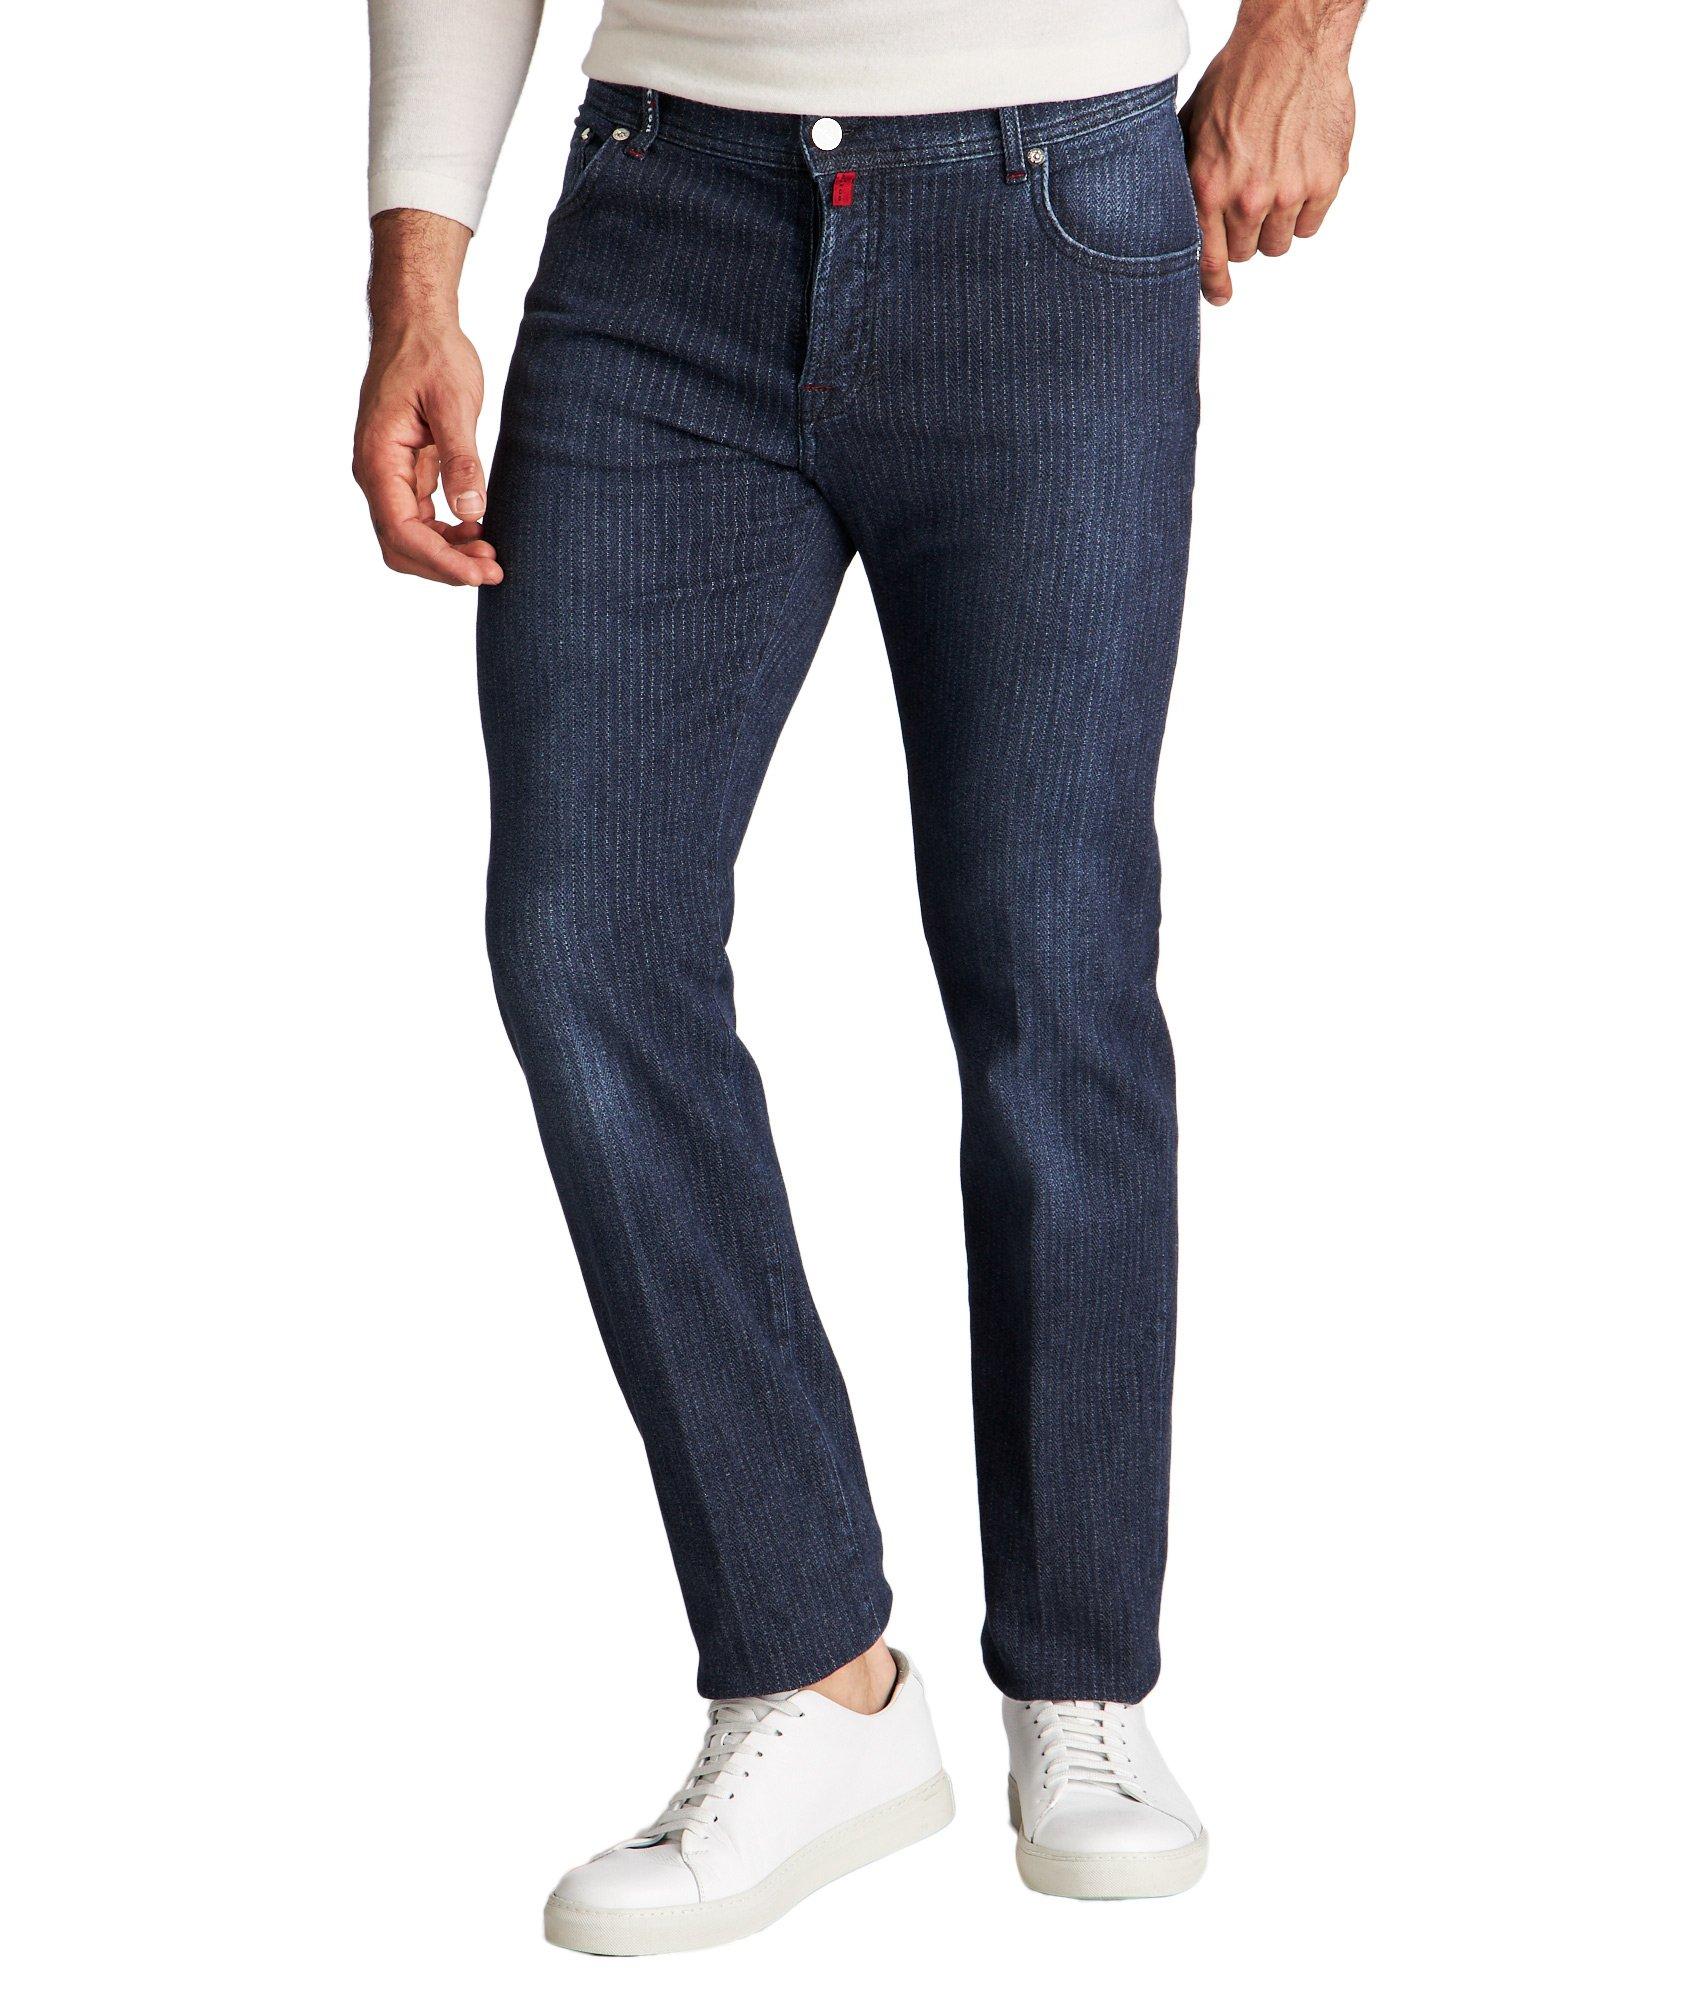 Slim Fit Chalk Striped Jeans image 0